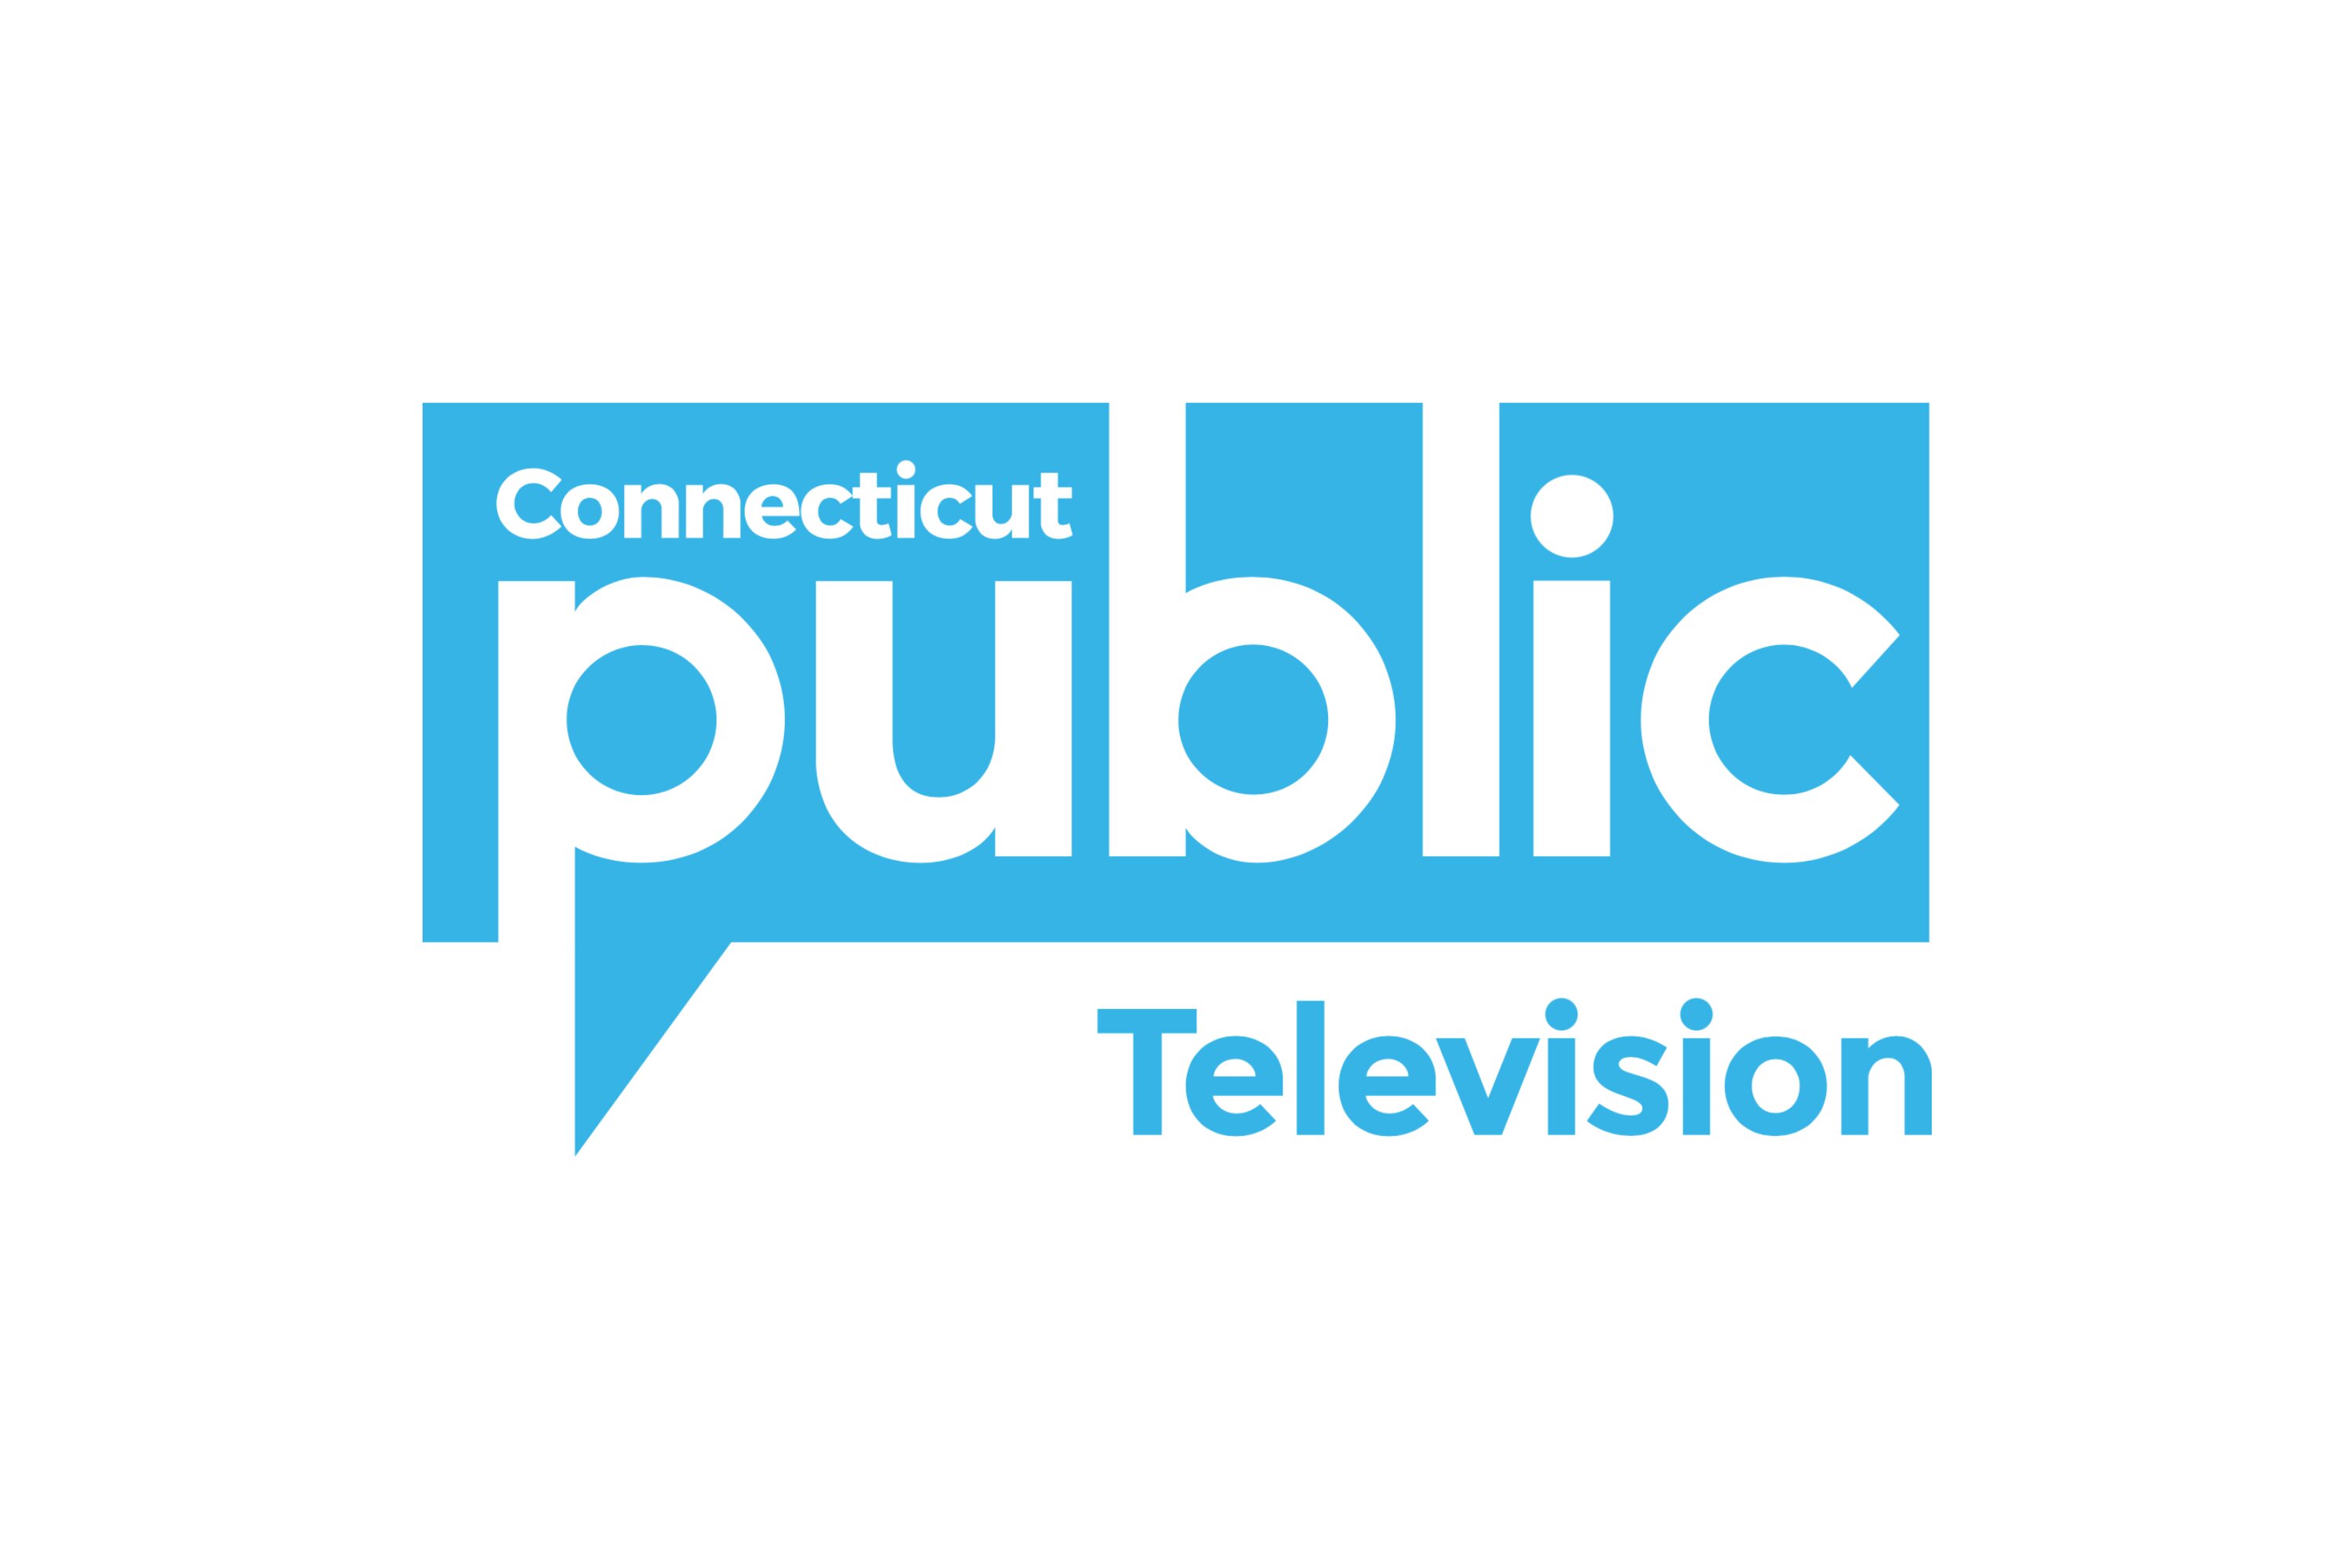 American public Television. CT Company. GM Connecticut & Production logo. Milwaukee public Television logo 2003. Public tv